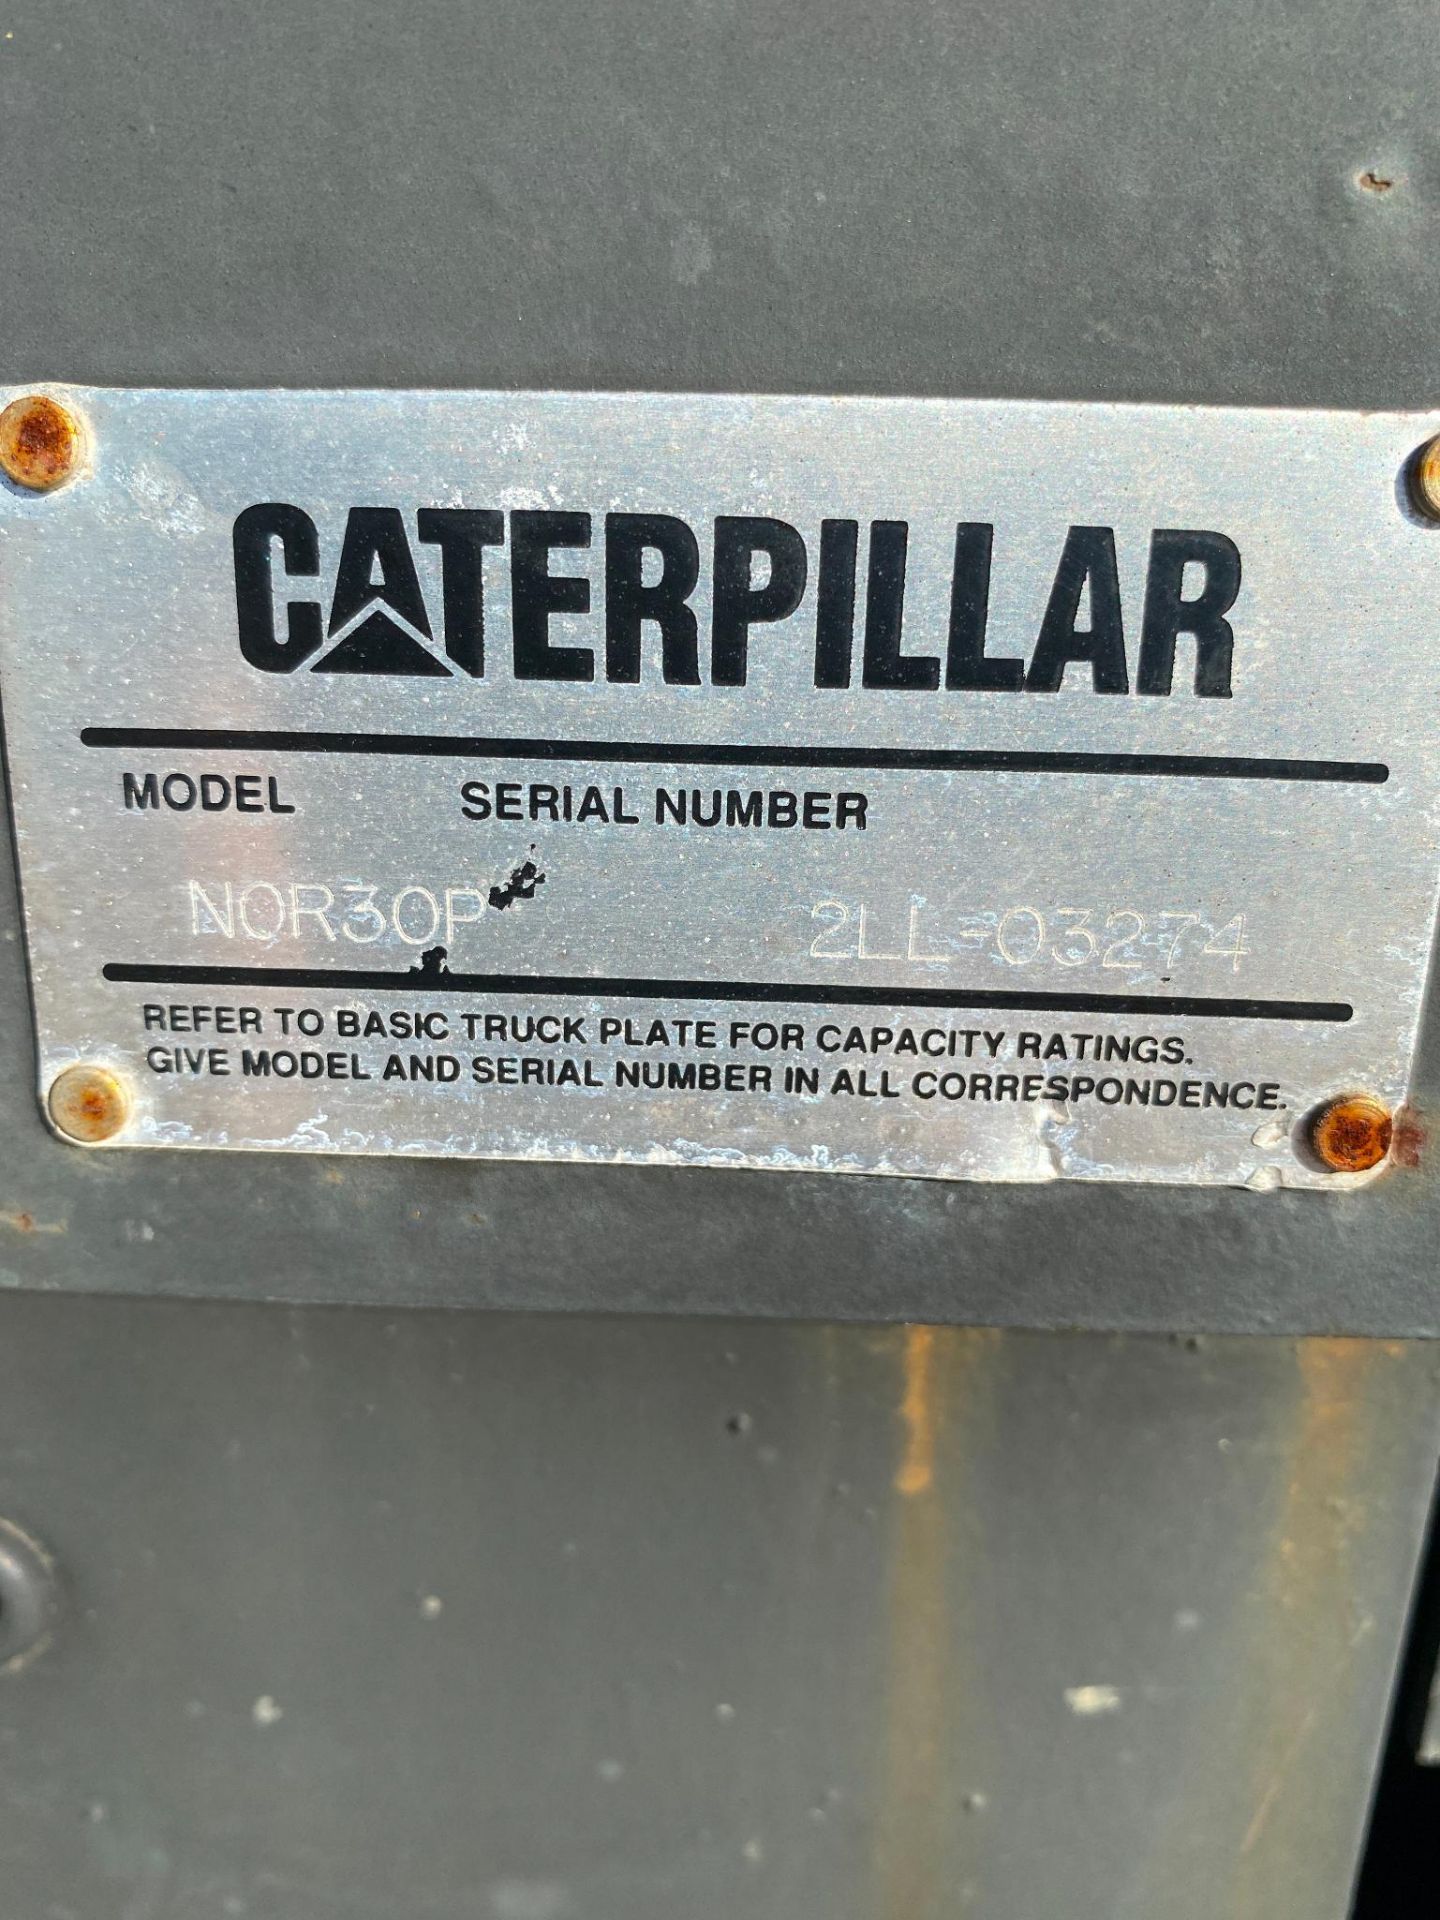 ELECTRIC ORDER PICKER, CATERPILLAR MDL. NOR30P, 3,000 lb. cap., S/N 2LL-03274 (needs repair) ( - Image 4 of 6